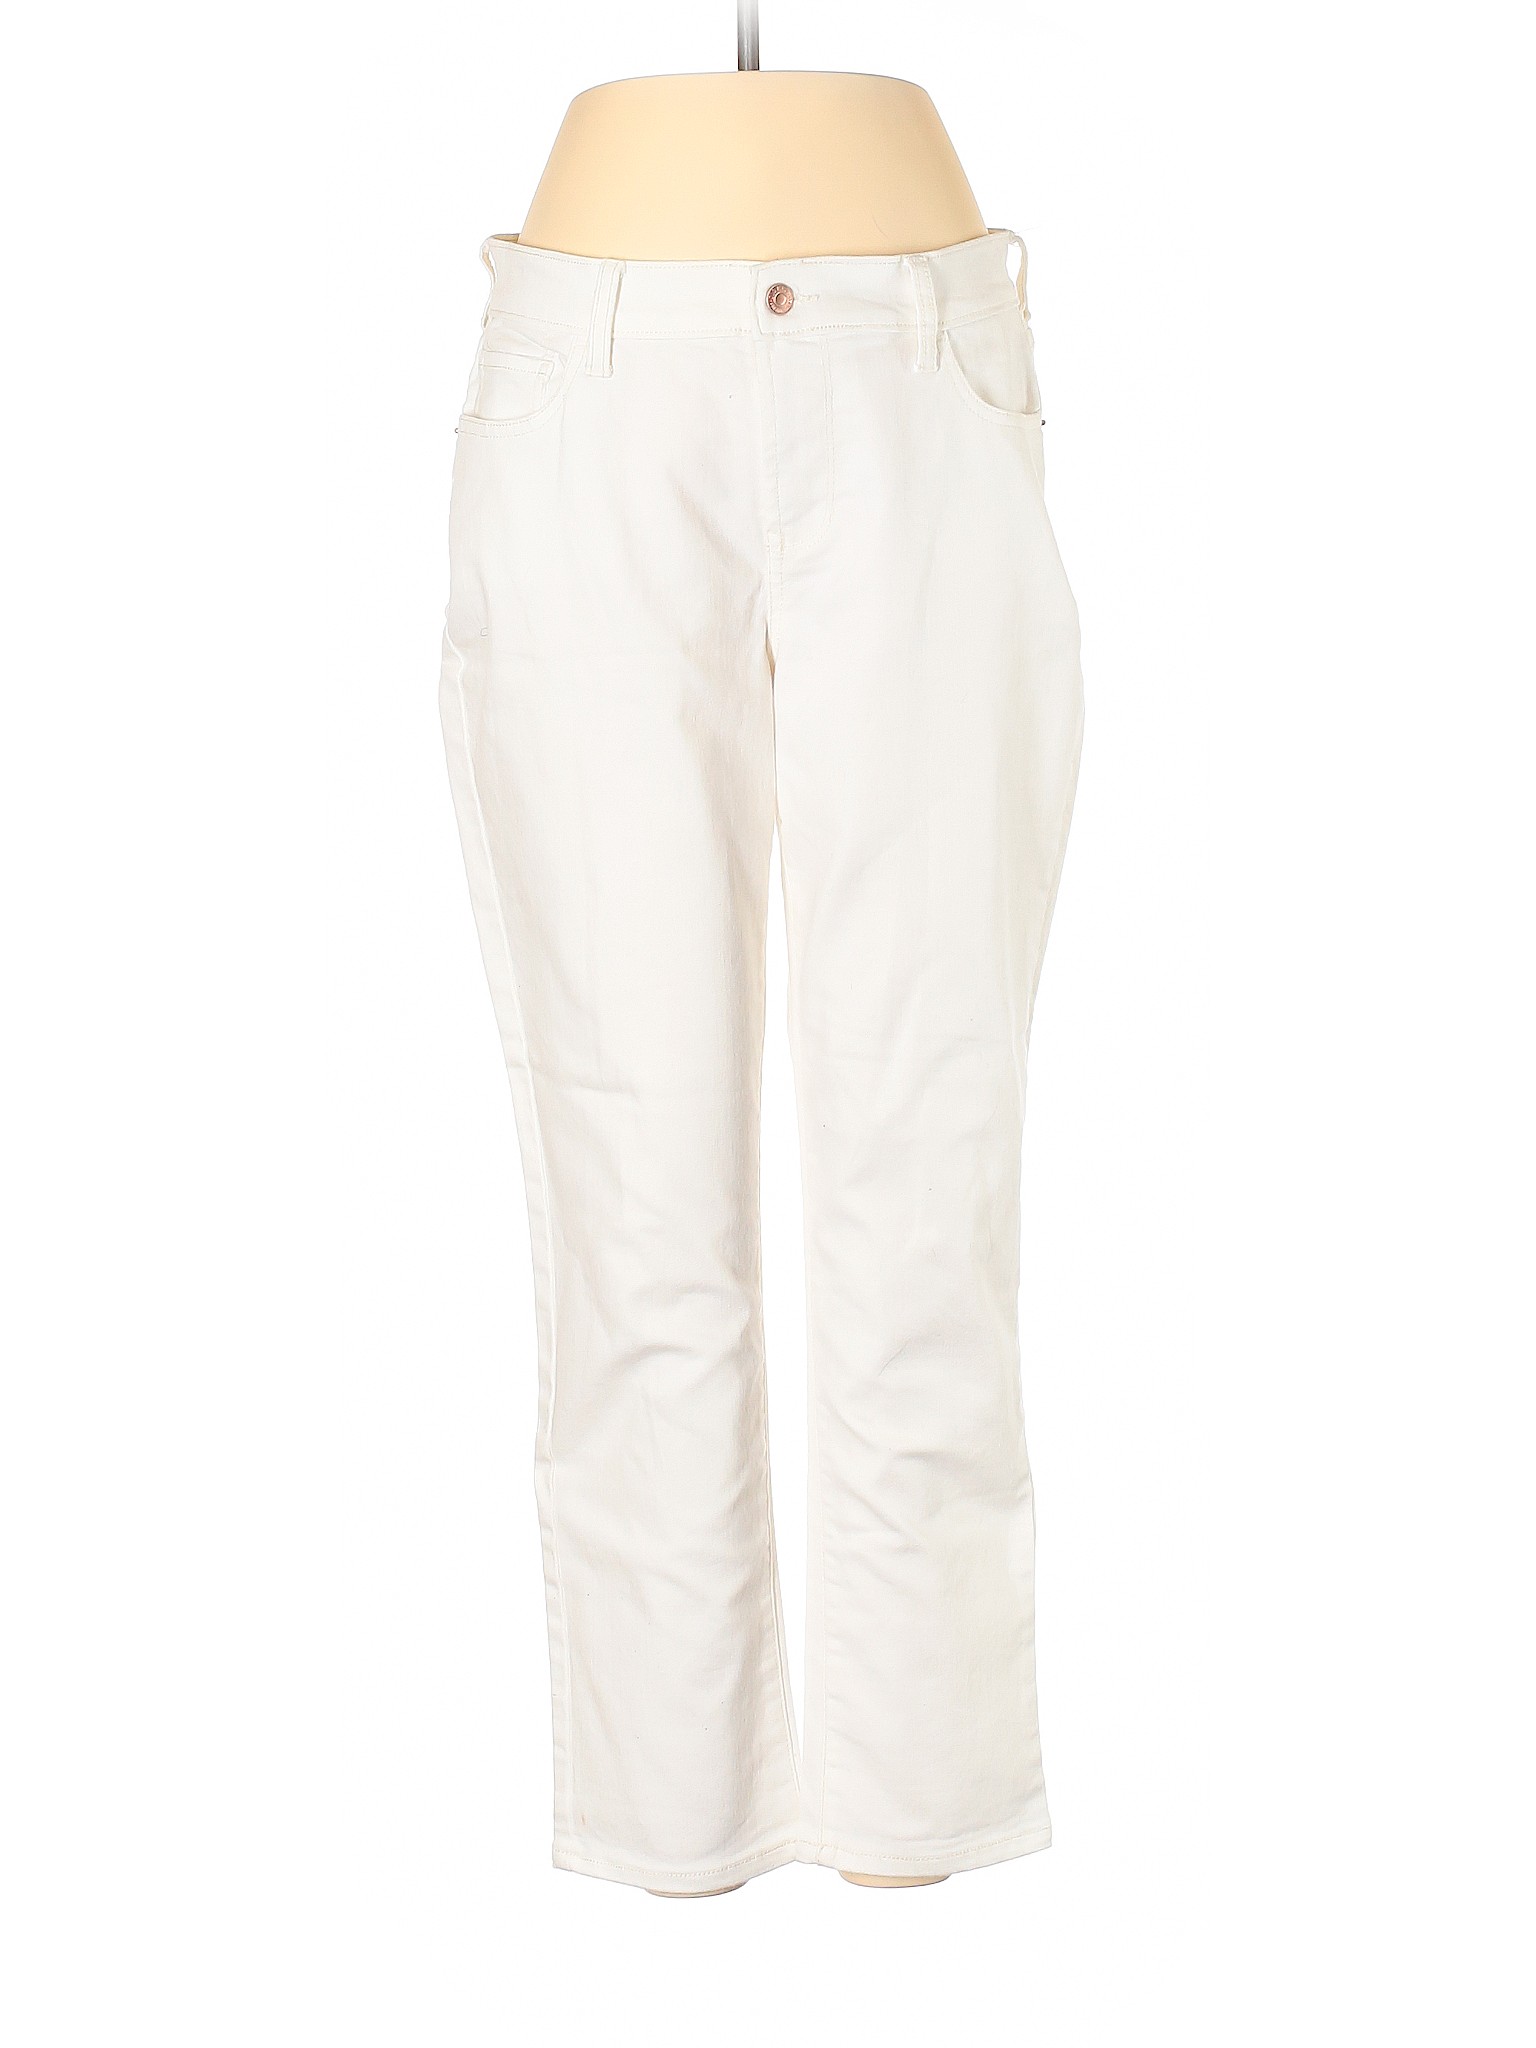 Old Navy Women White Jeans 6 | eBay